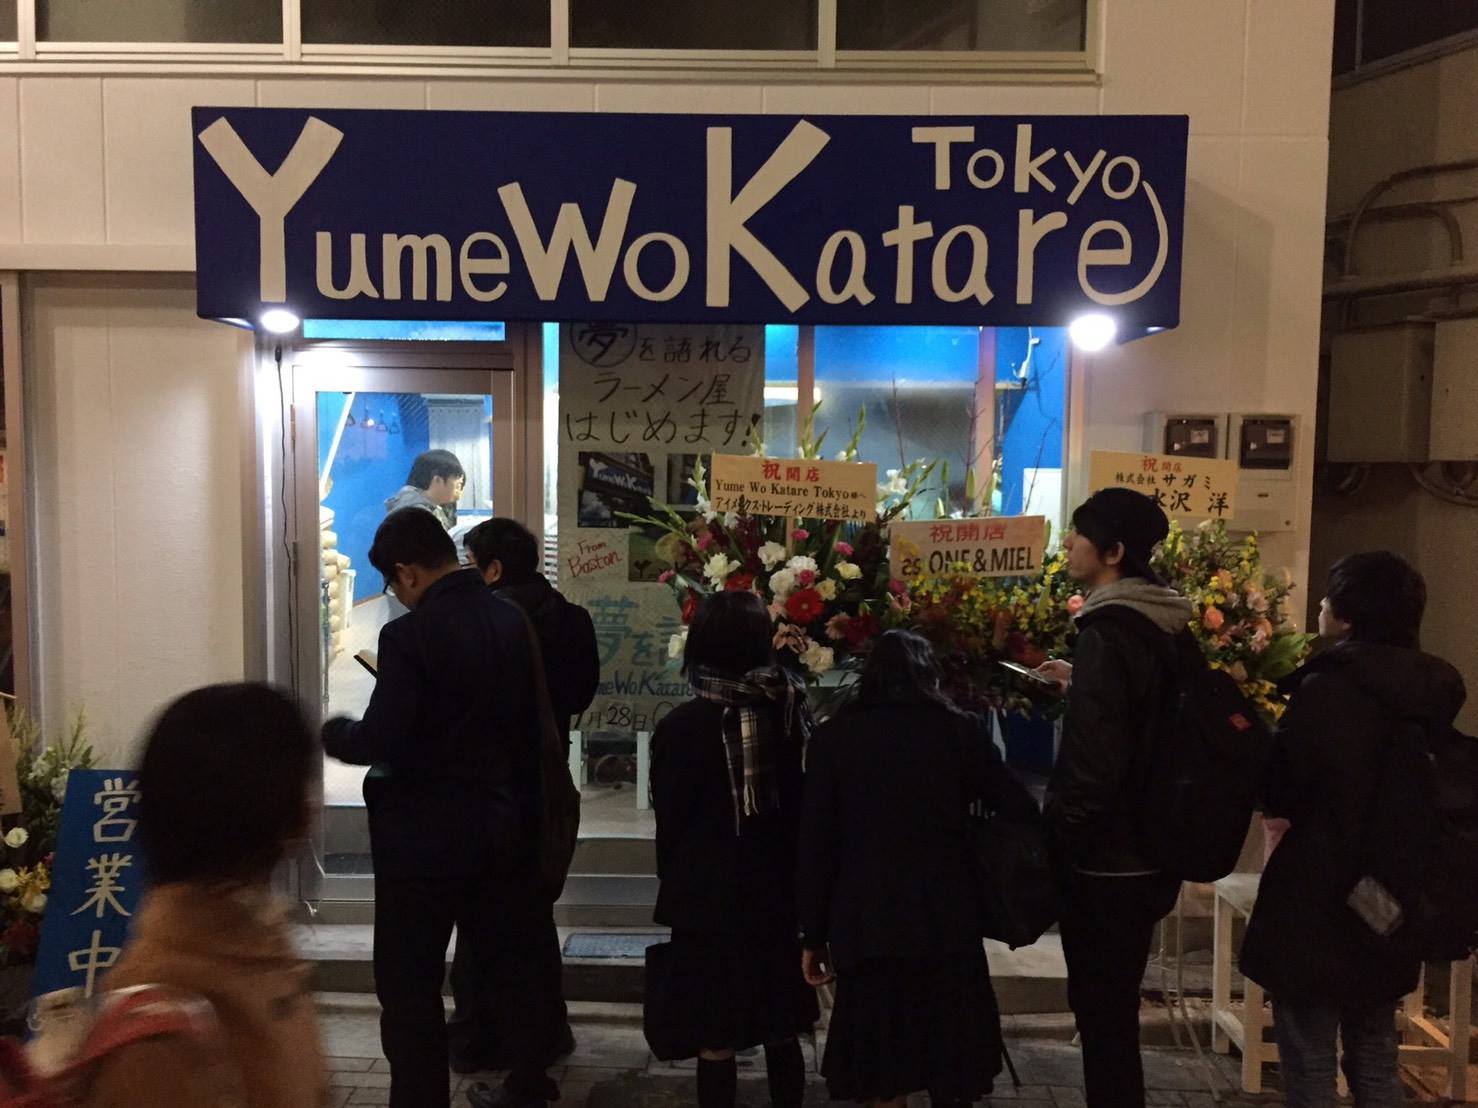 Yume Wo Katare in Tokyo